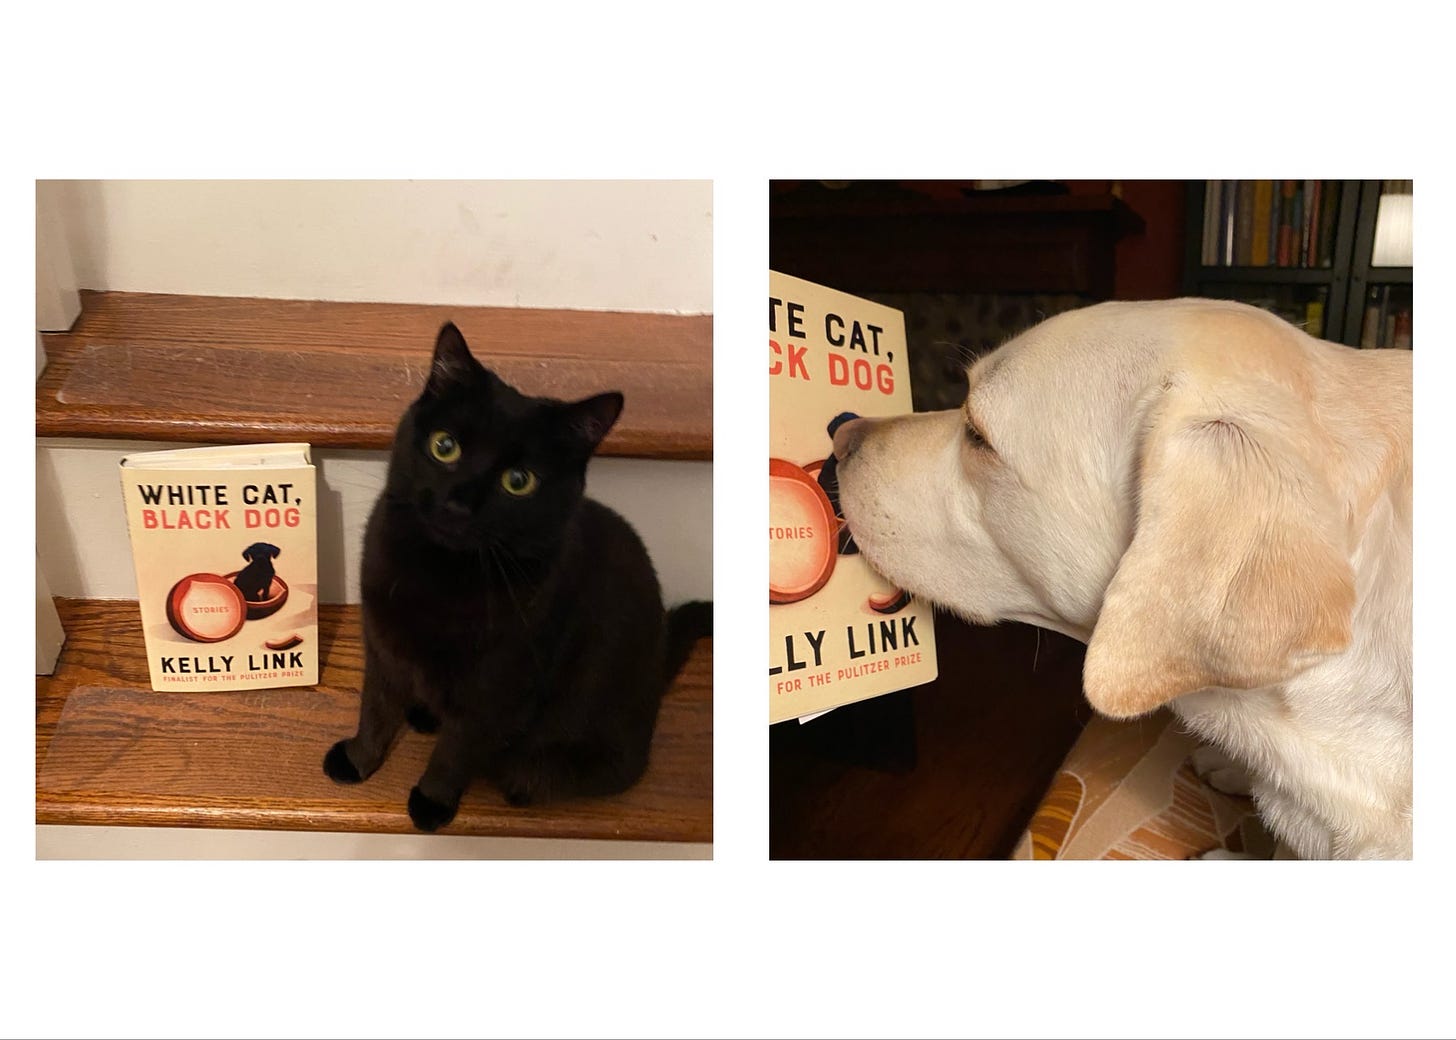 Image shows a black cat and white dog alongside Kelly Link's WHITE CAT, BLACK DOG